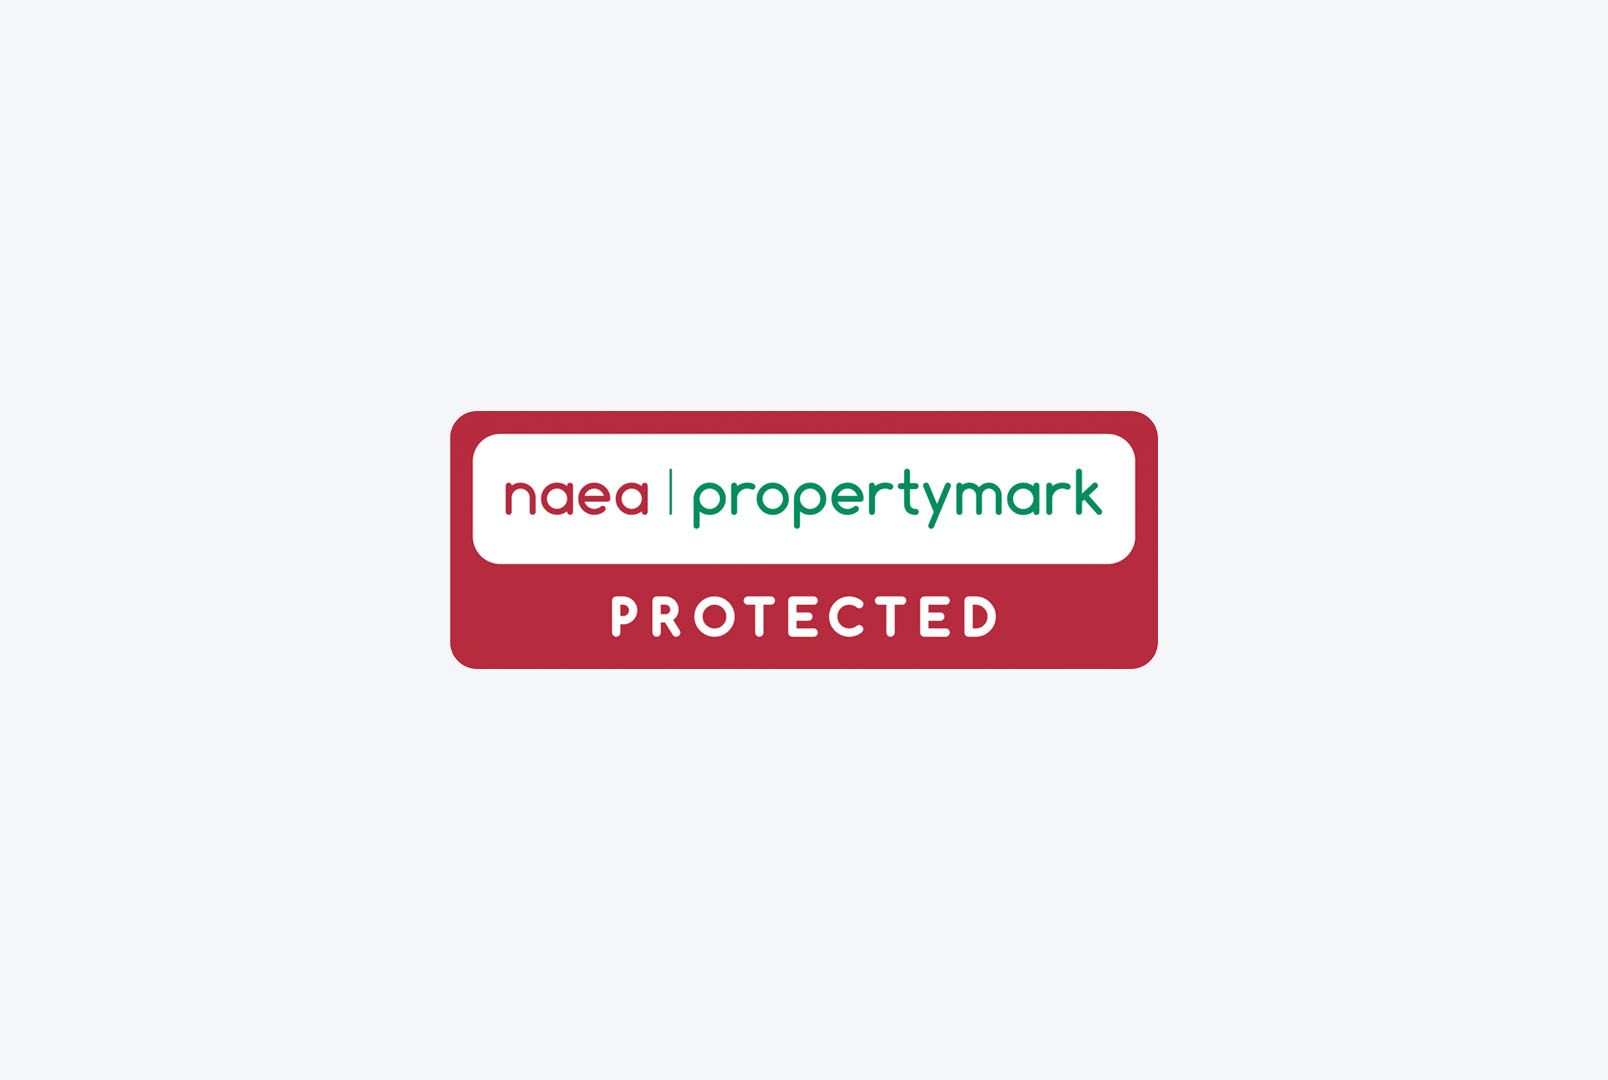 NAEA Propertymark